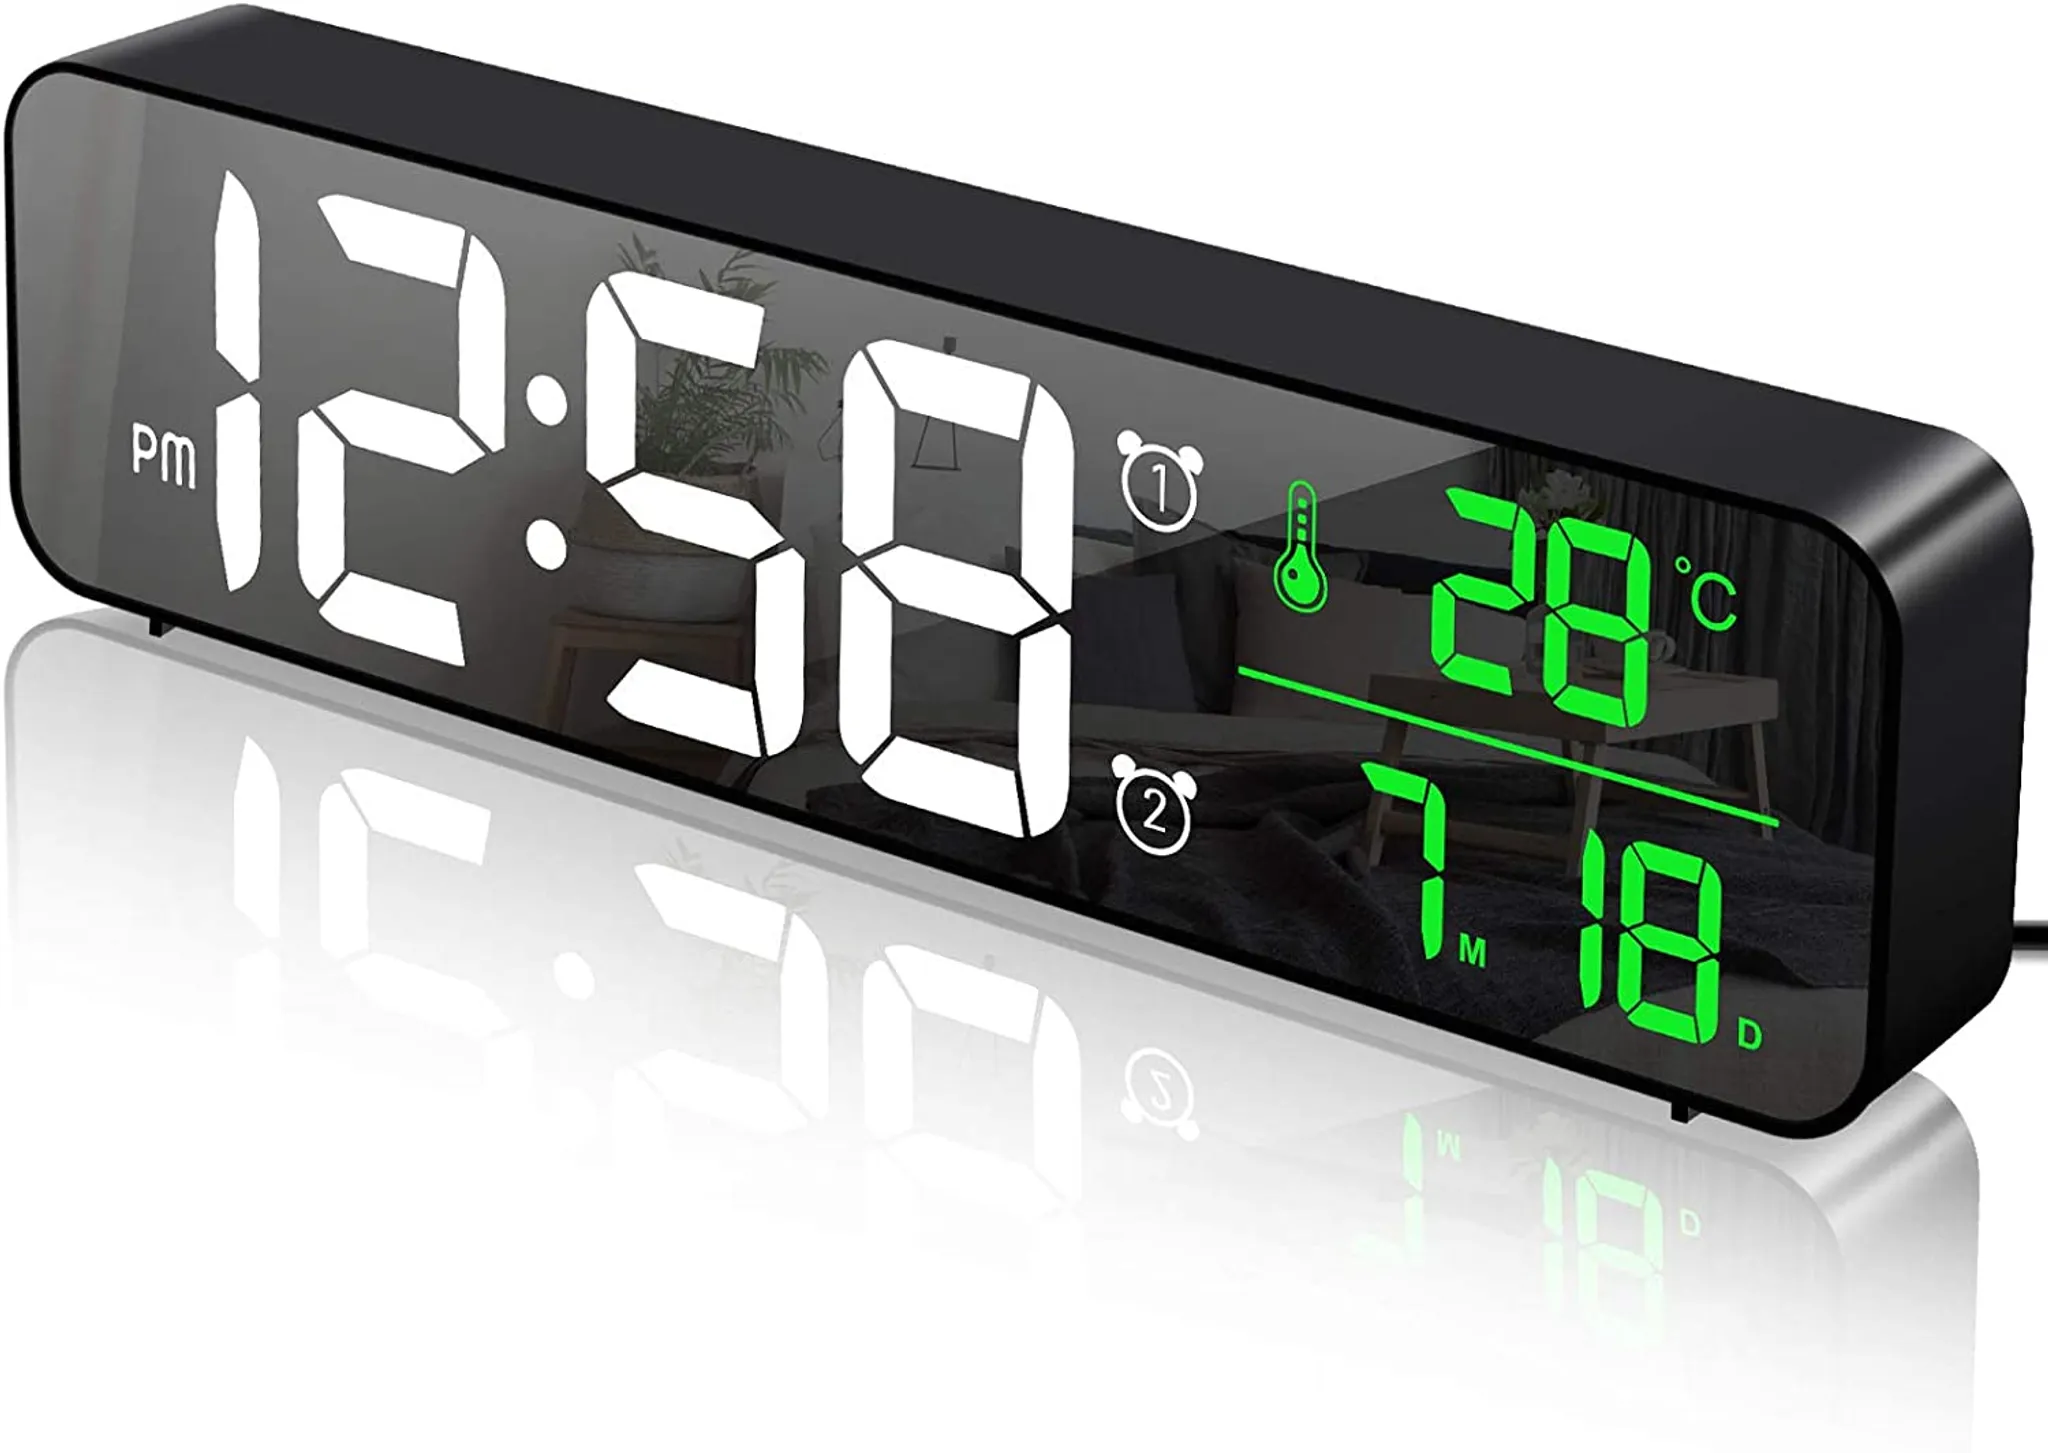 Kaufe 1 stücke Auto Digitale Uhr & Temperatur Display